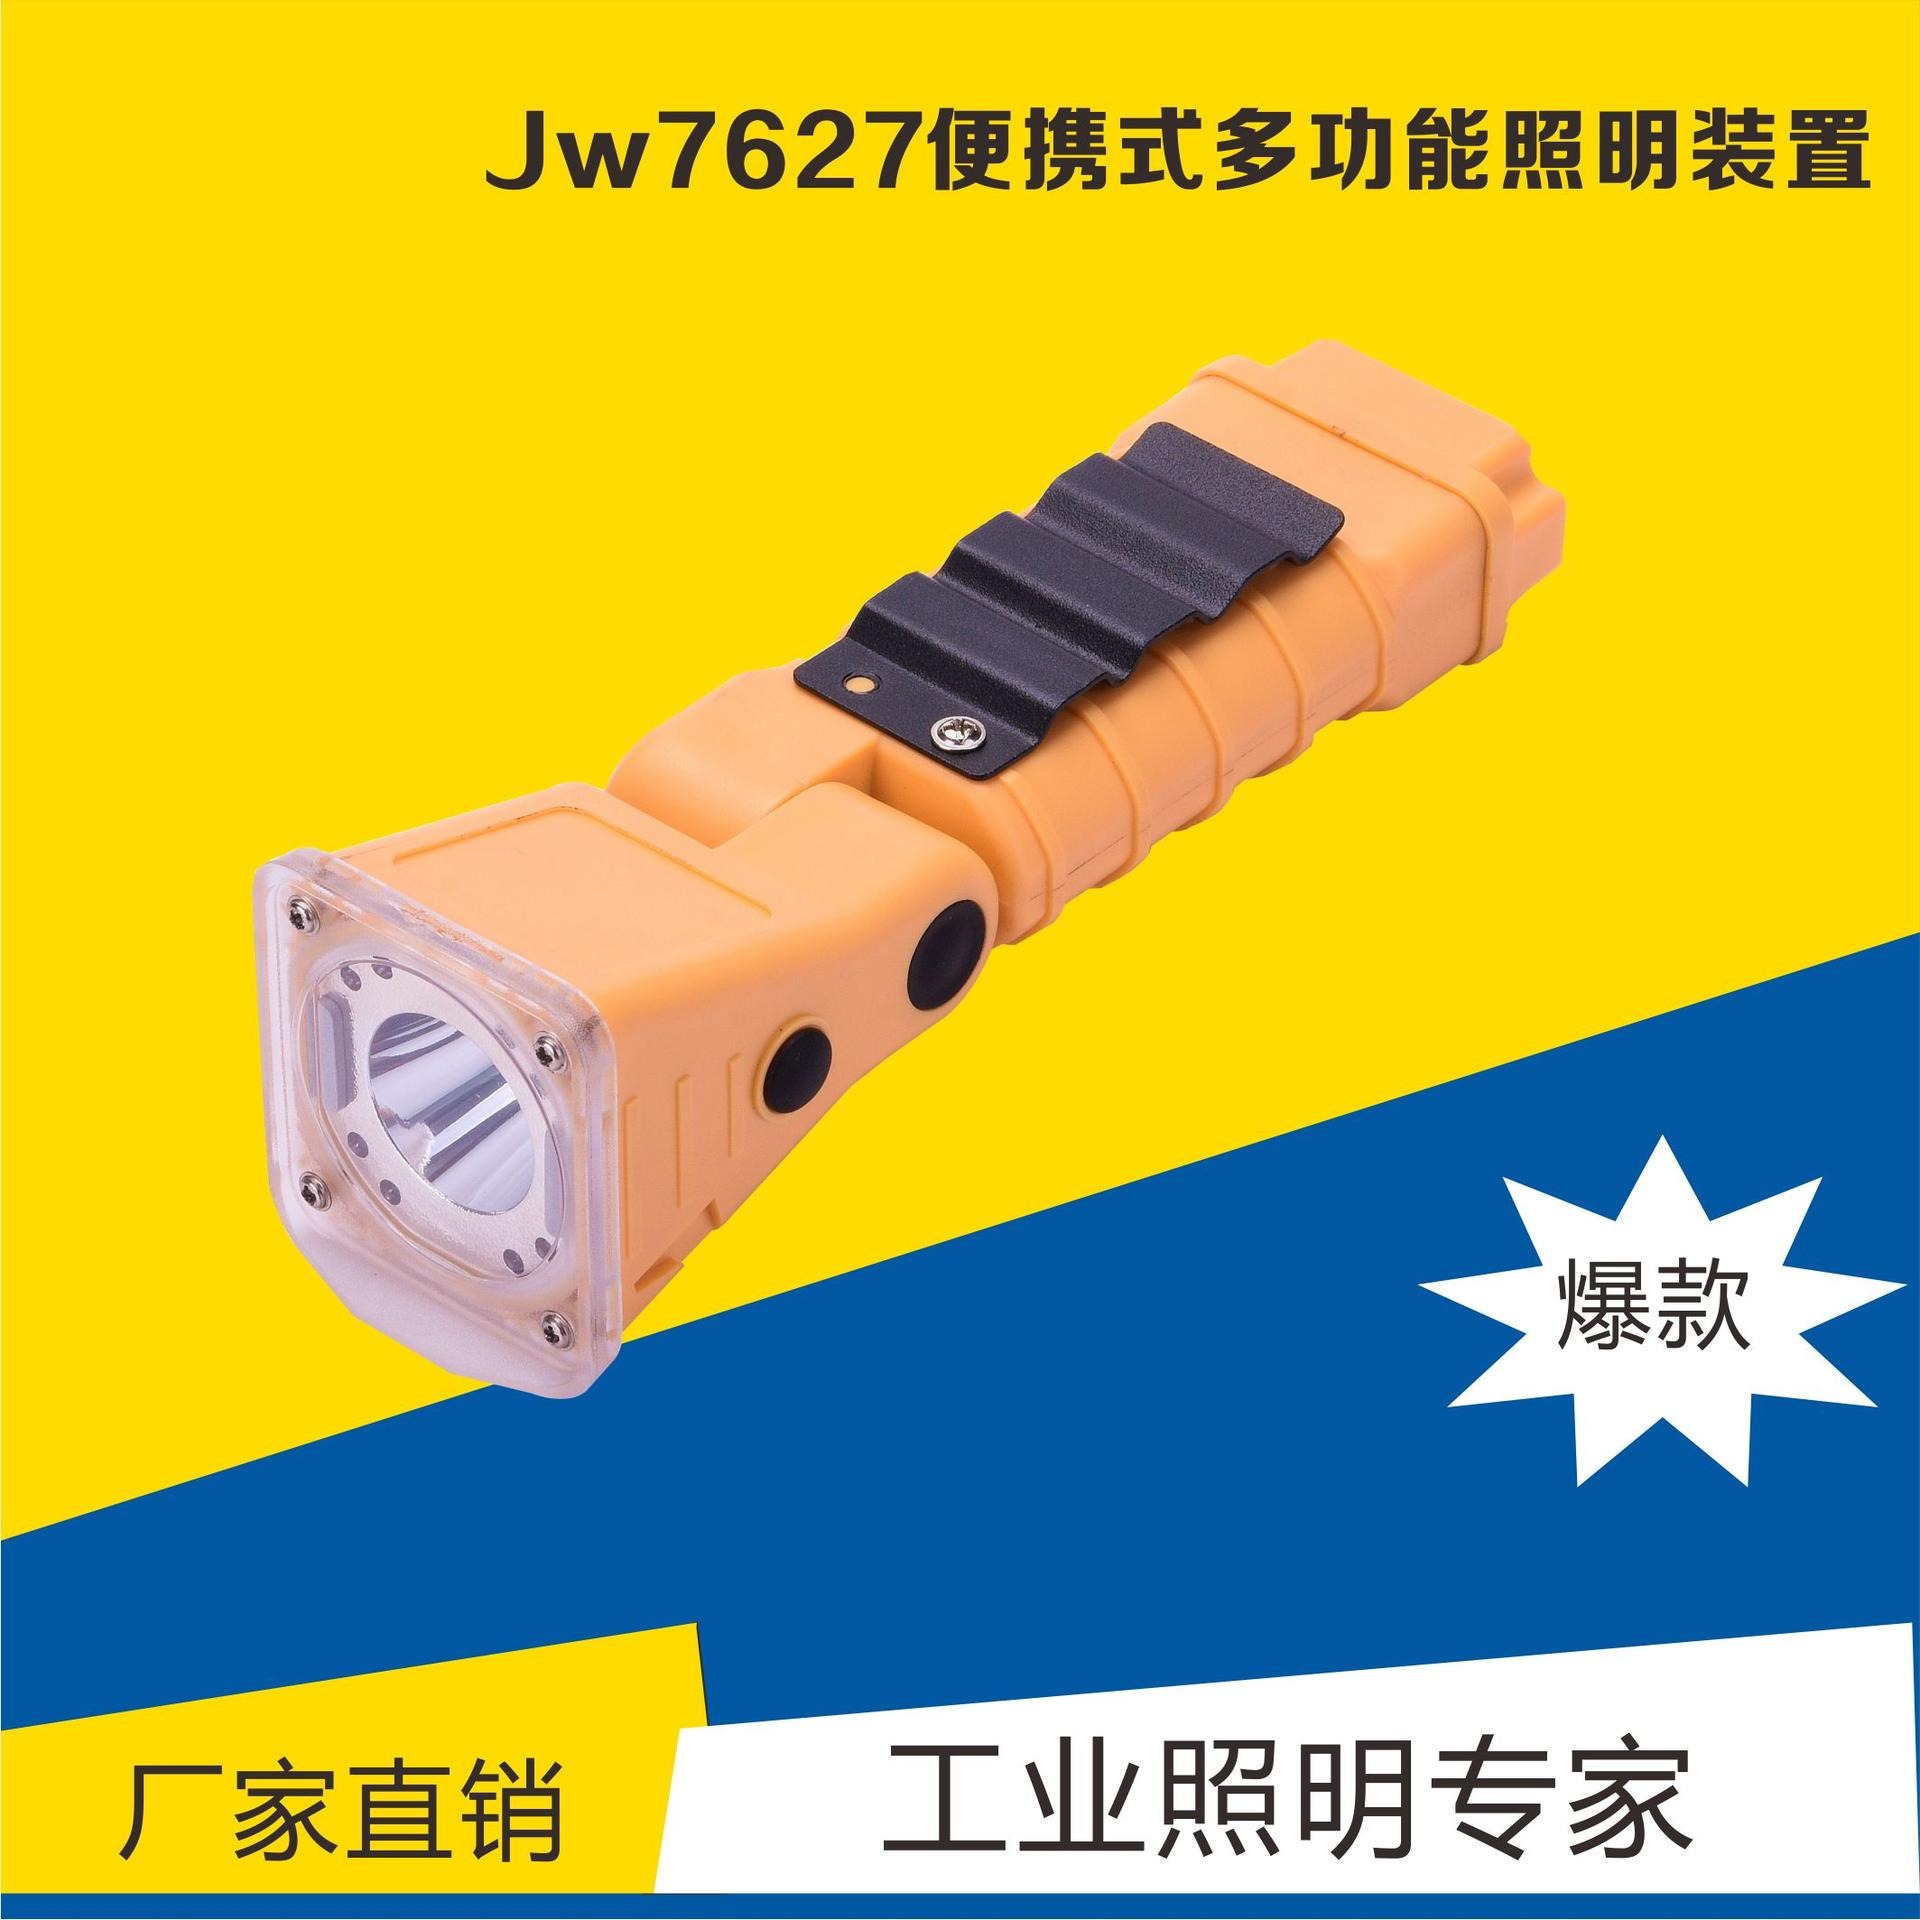 JW7627A多功能照明装置  消防员卡扣佩戴腰挂式手电筒 SZSW2870户外野外应急手提灯